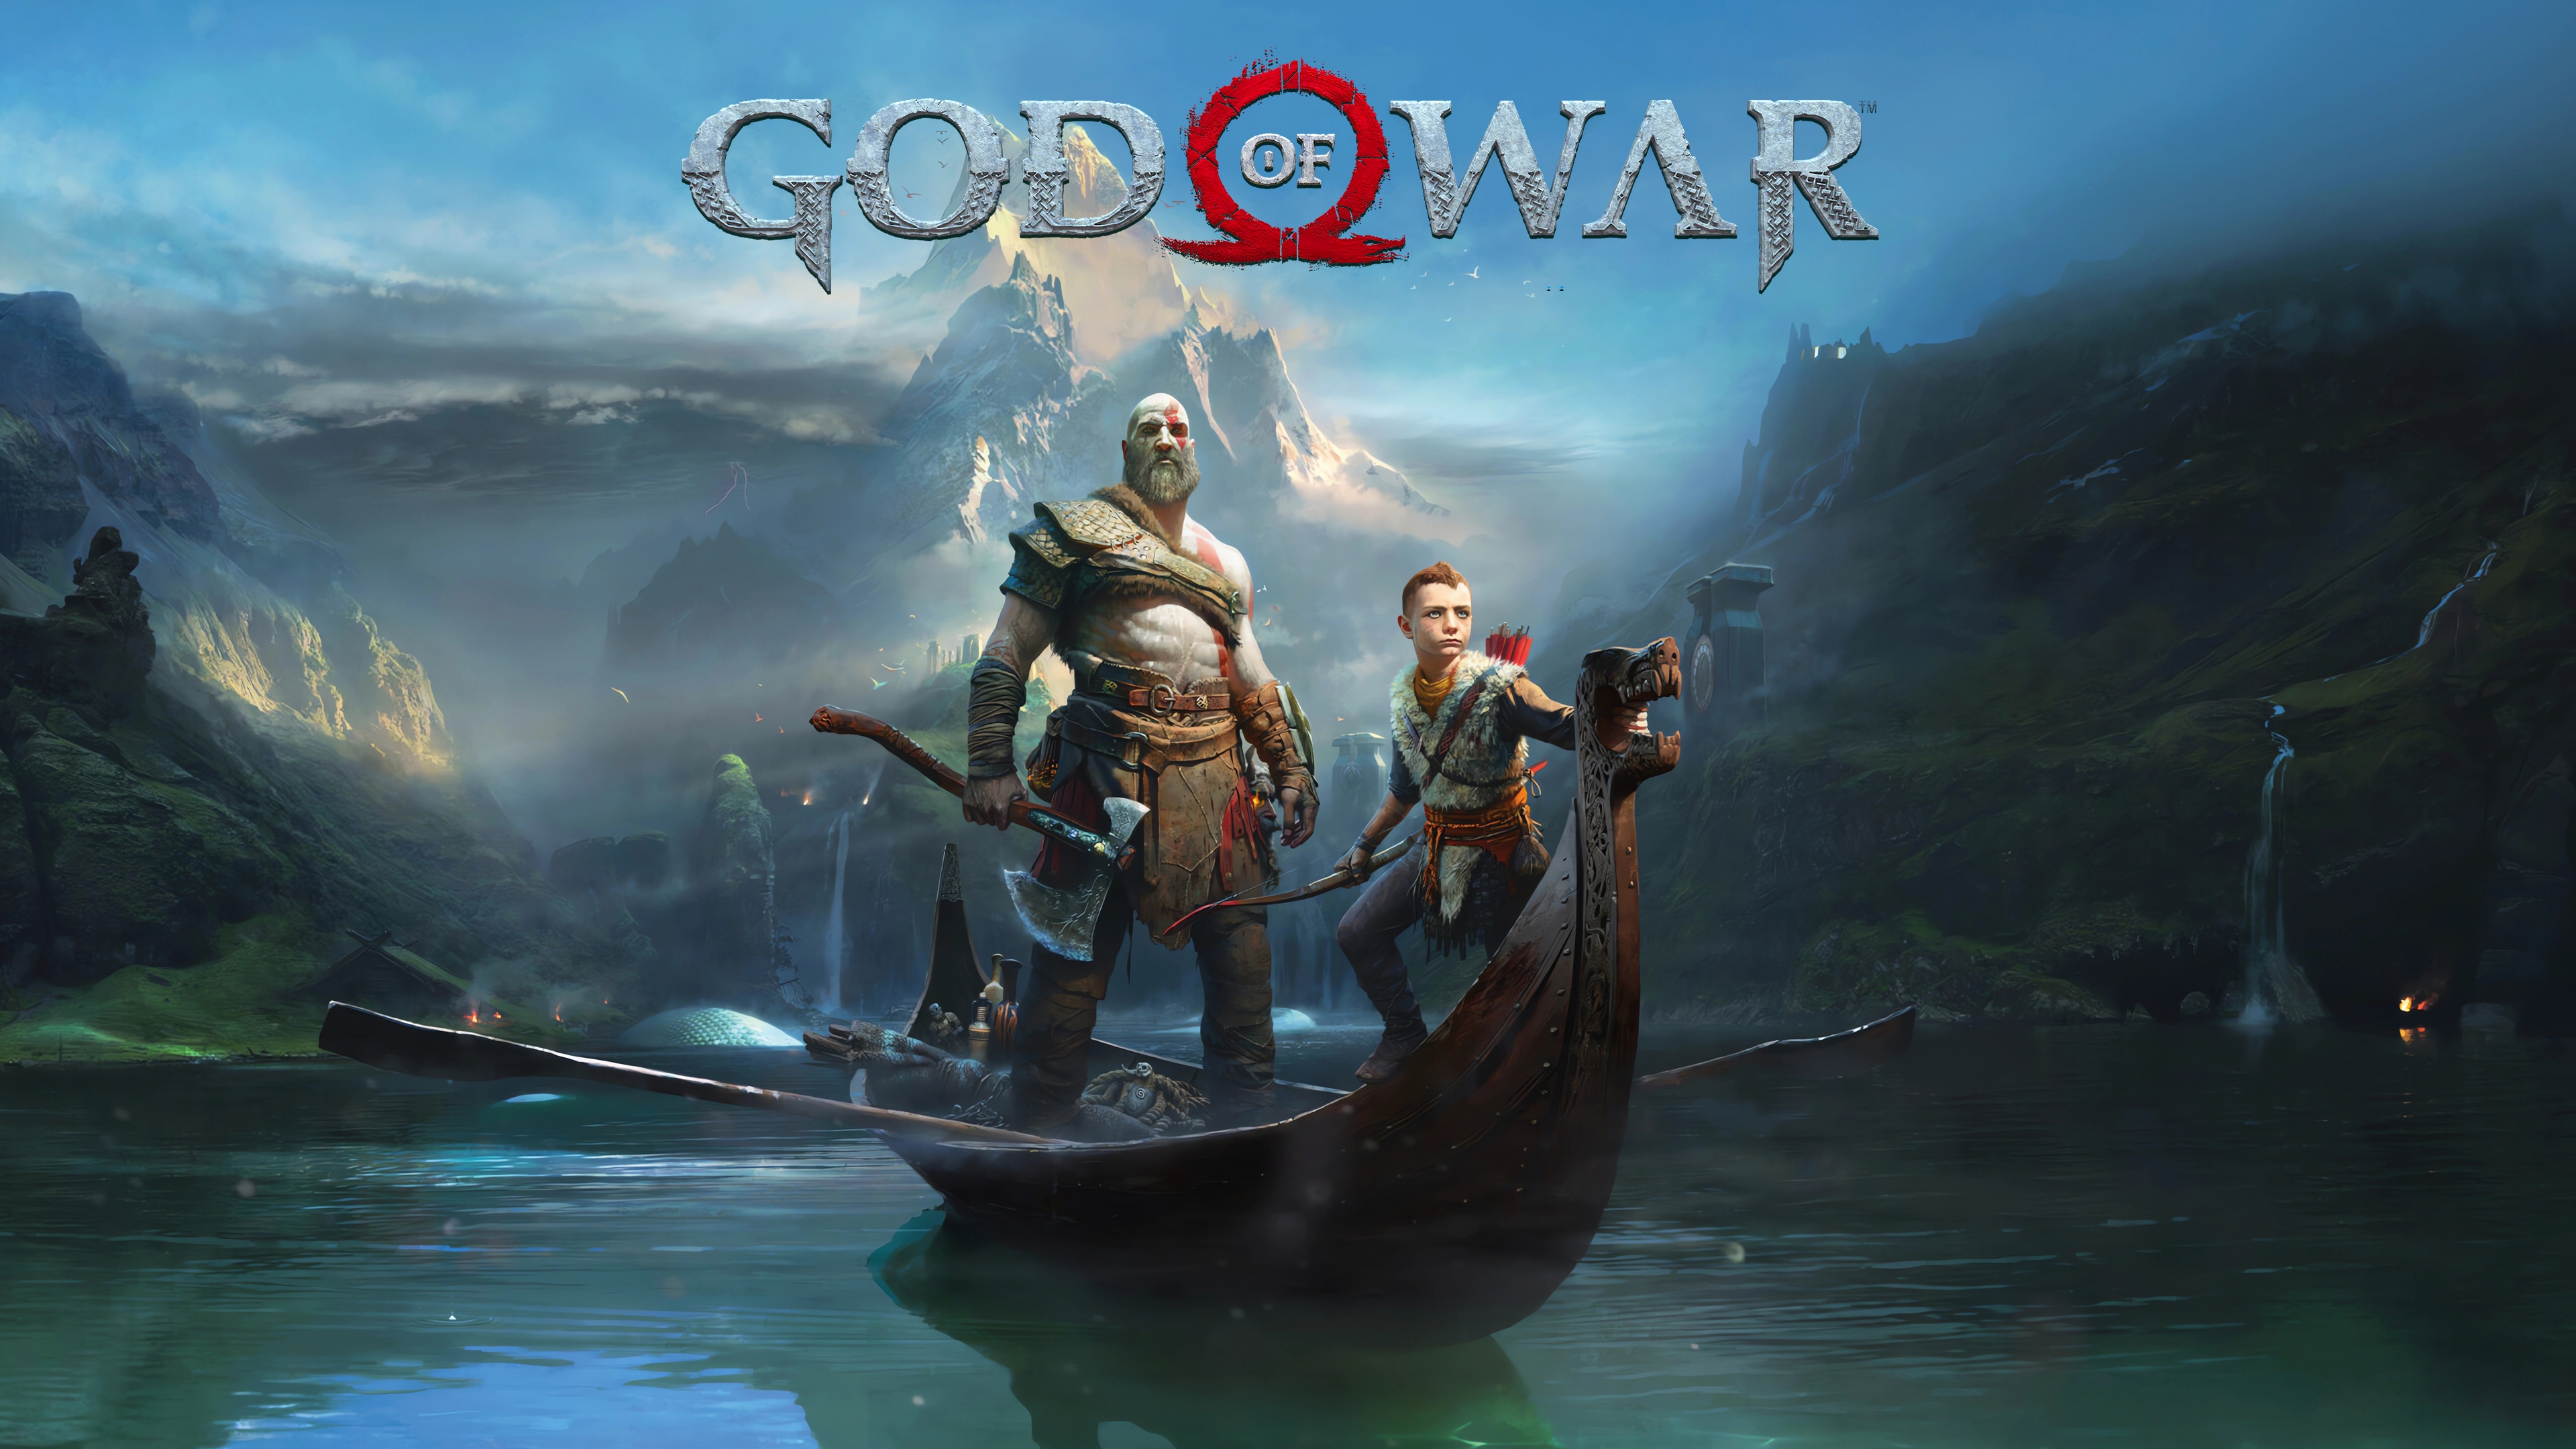 Buy God of War Steam